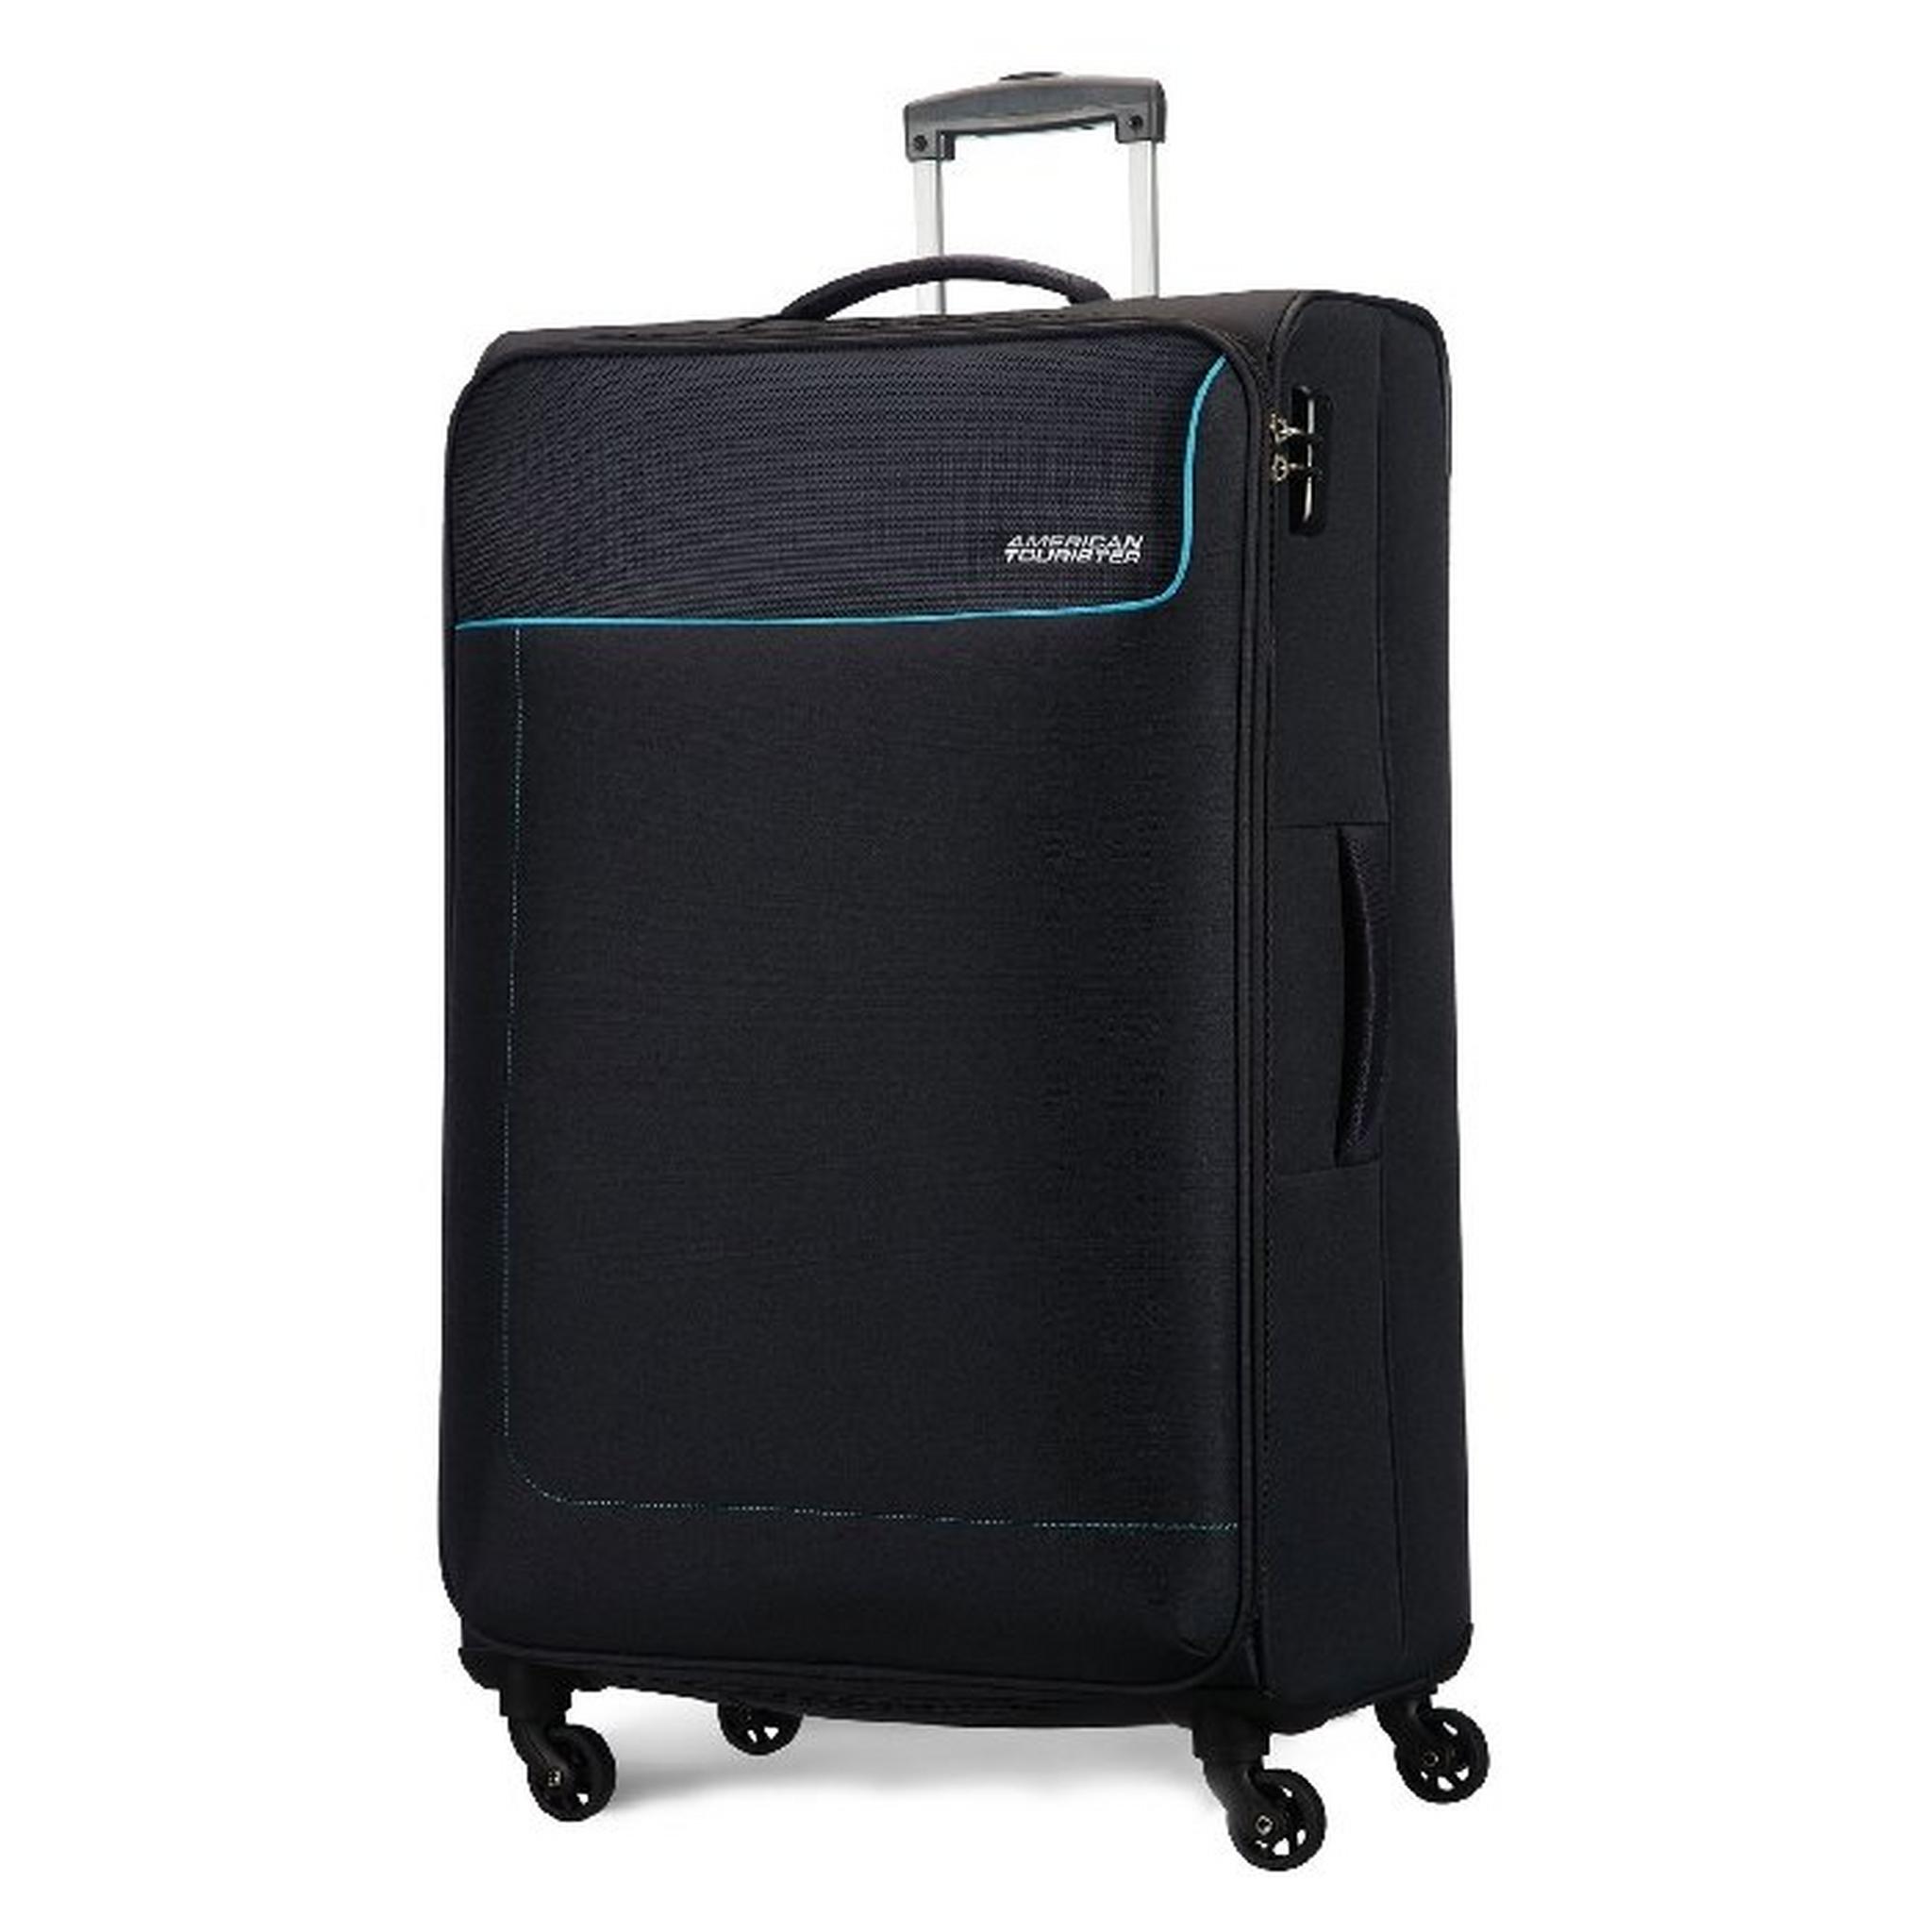 American Tourister Jamaica 80cm Soft Luggage - Black